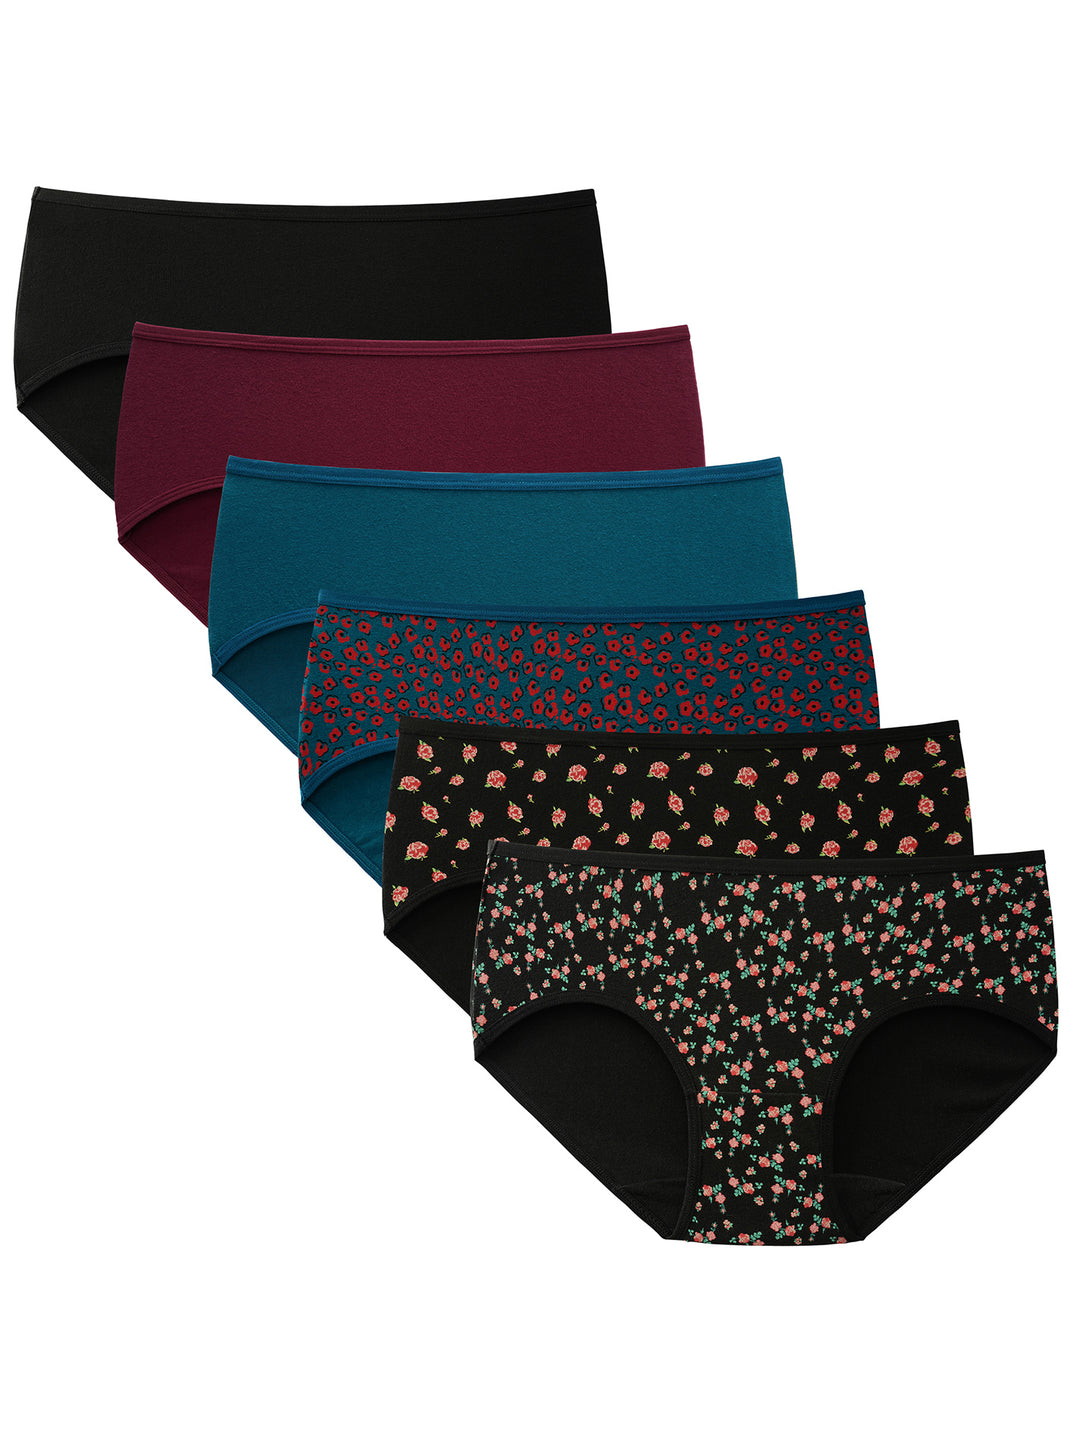 Undies.com Women's 6-Pack Cotton Hipkini Panties Underwear, Multicolor,  Medium at  Women's Clothing store